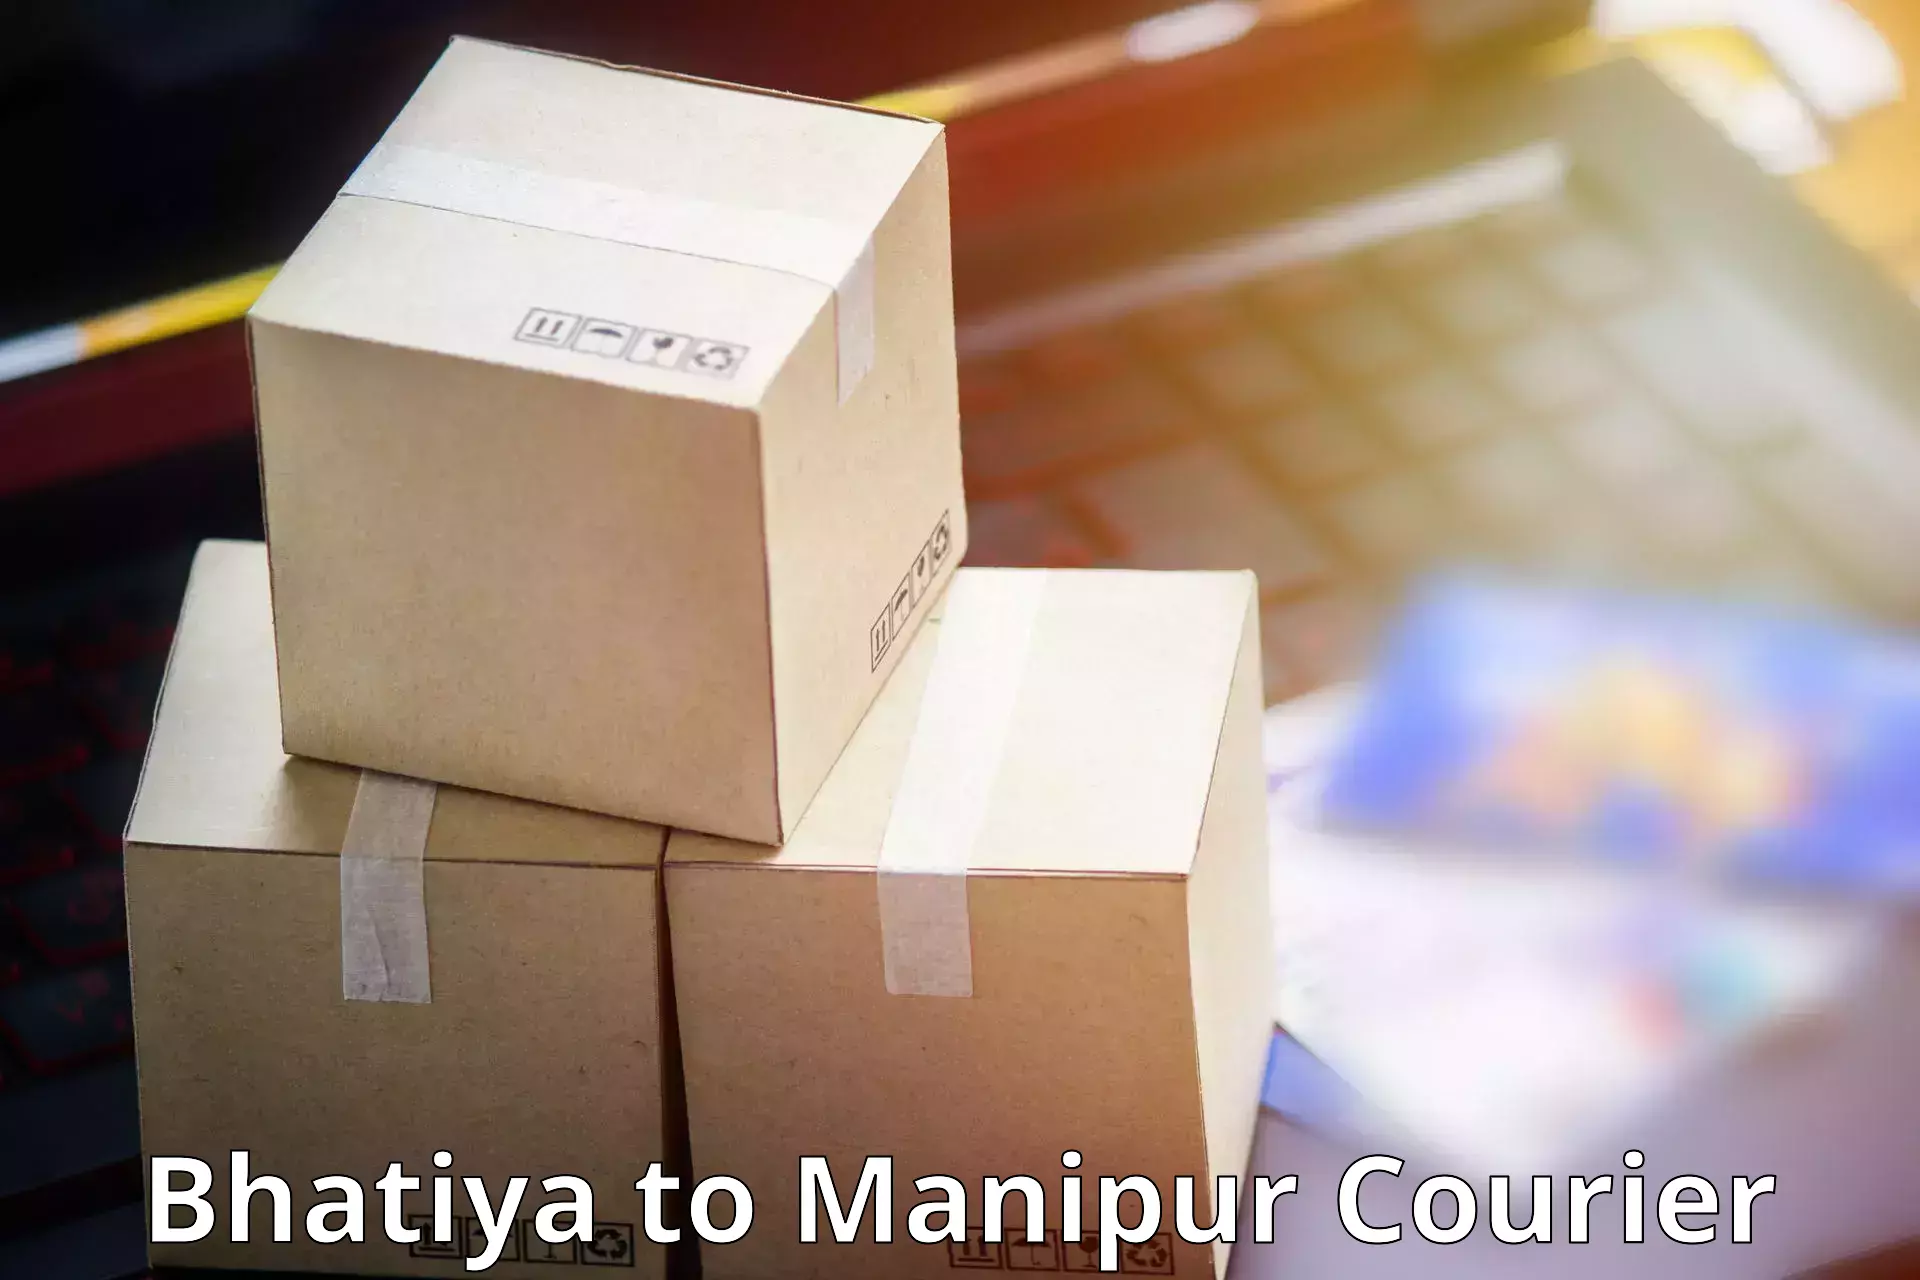 Logistics service provider Bhatiya to Manipur